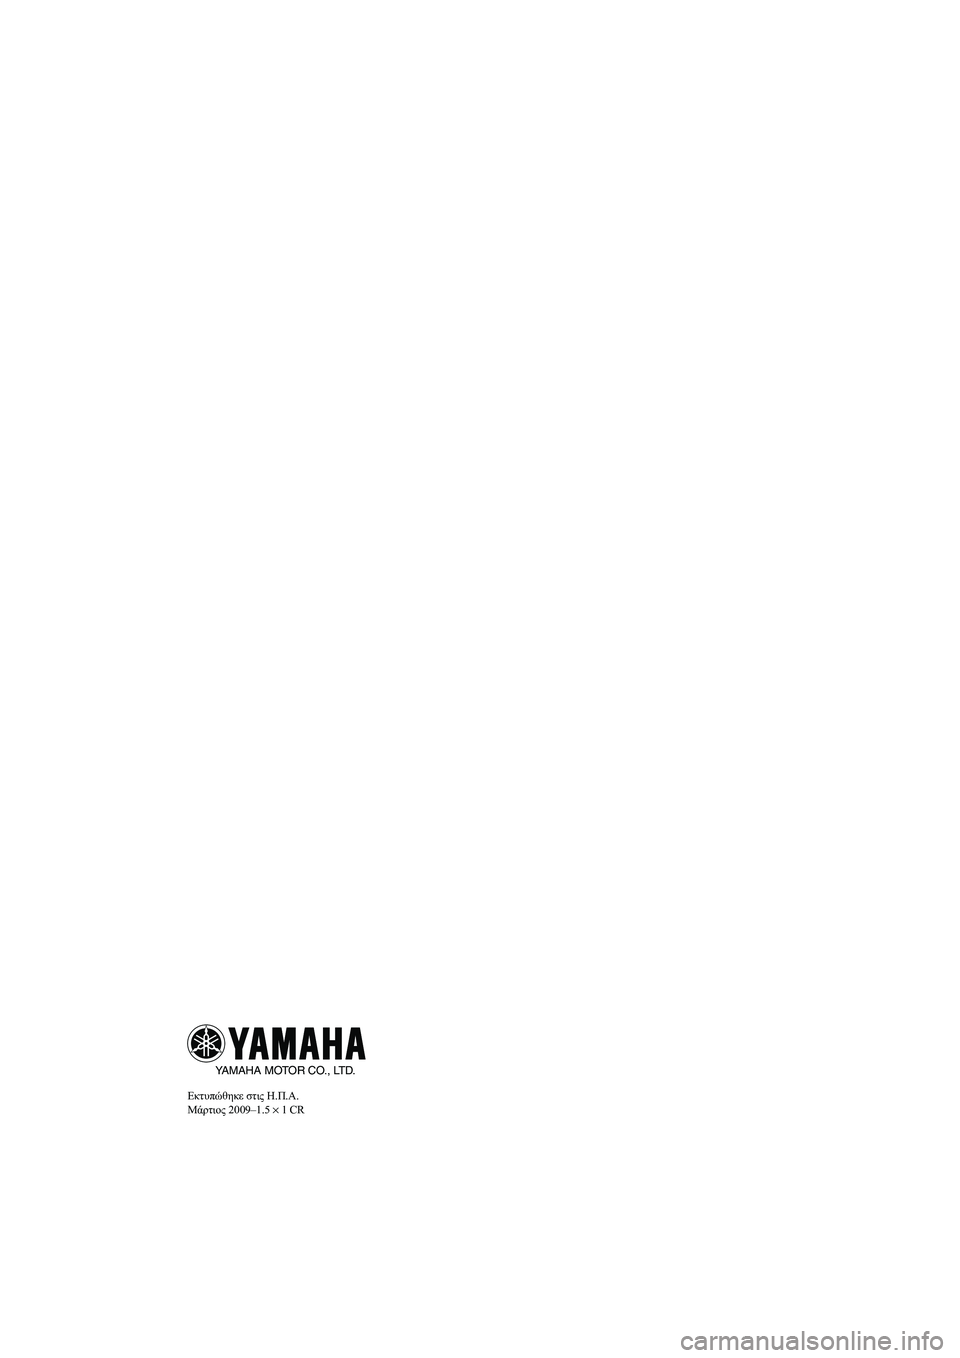 YAMAHA FX HO CRUISER 2009  ΟΔΗΓΌΣ ΧΡΉΣΗΣ (in Greek) YAMAHA MOTOR CO., LTD.
Εκτυπώθηκε στις Η.Π.A.
Μάρτιος 2009–1.5 × 1 CR
UF2H70R0.book  Page 1  Friday, January 16, 2009  10:31 AM 